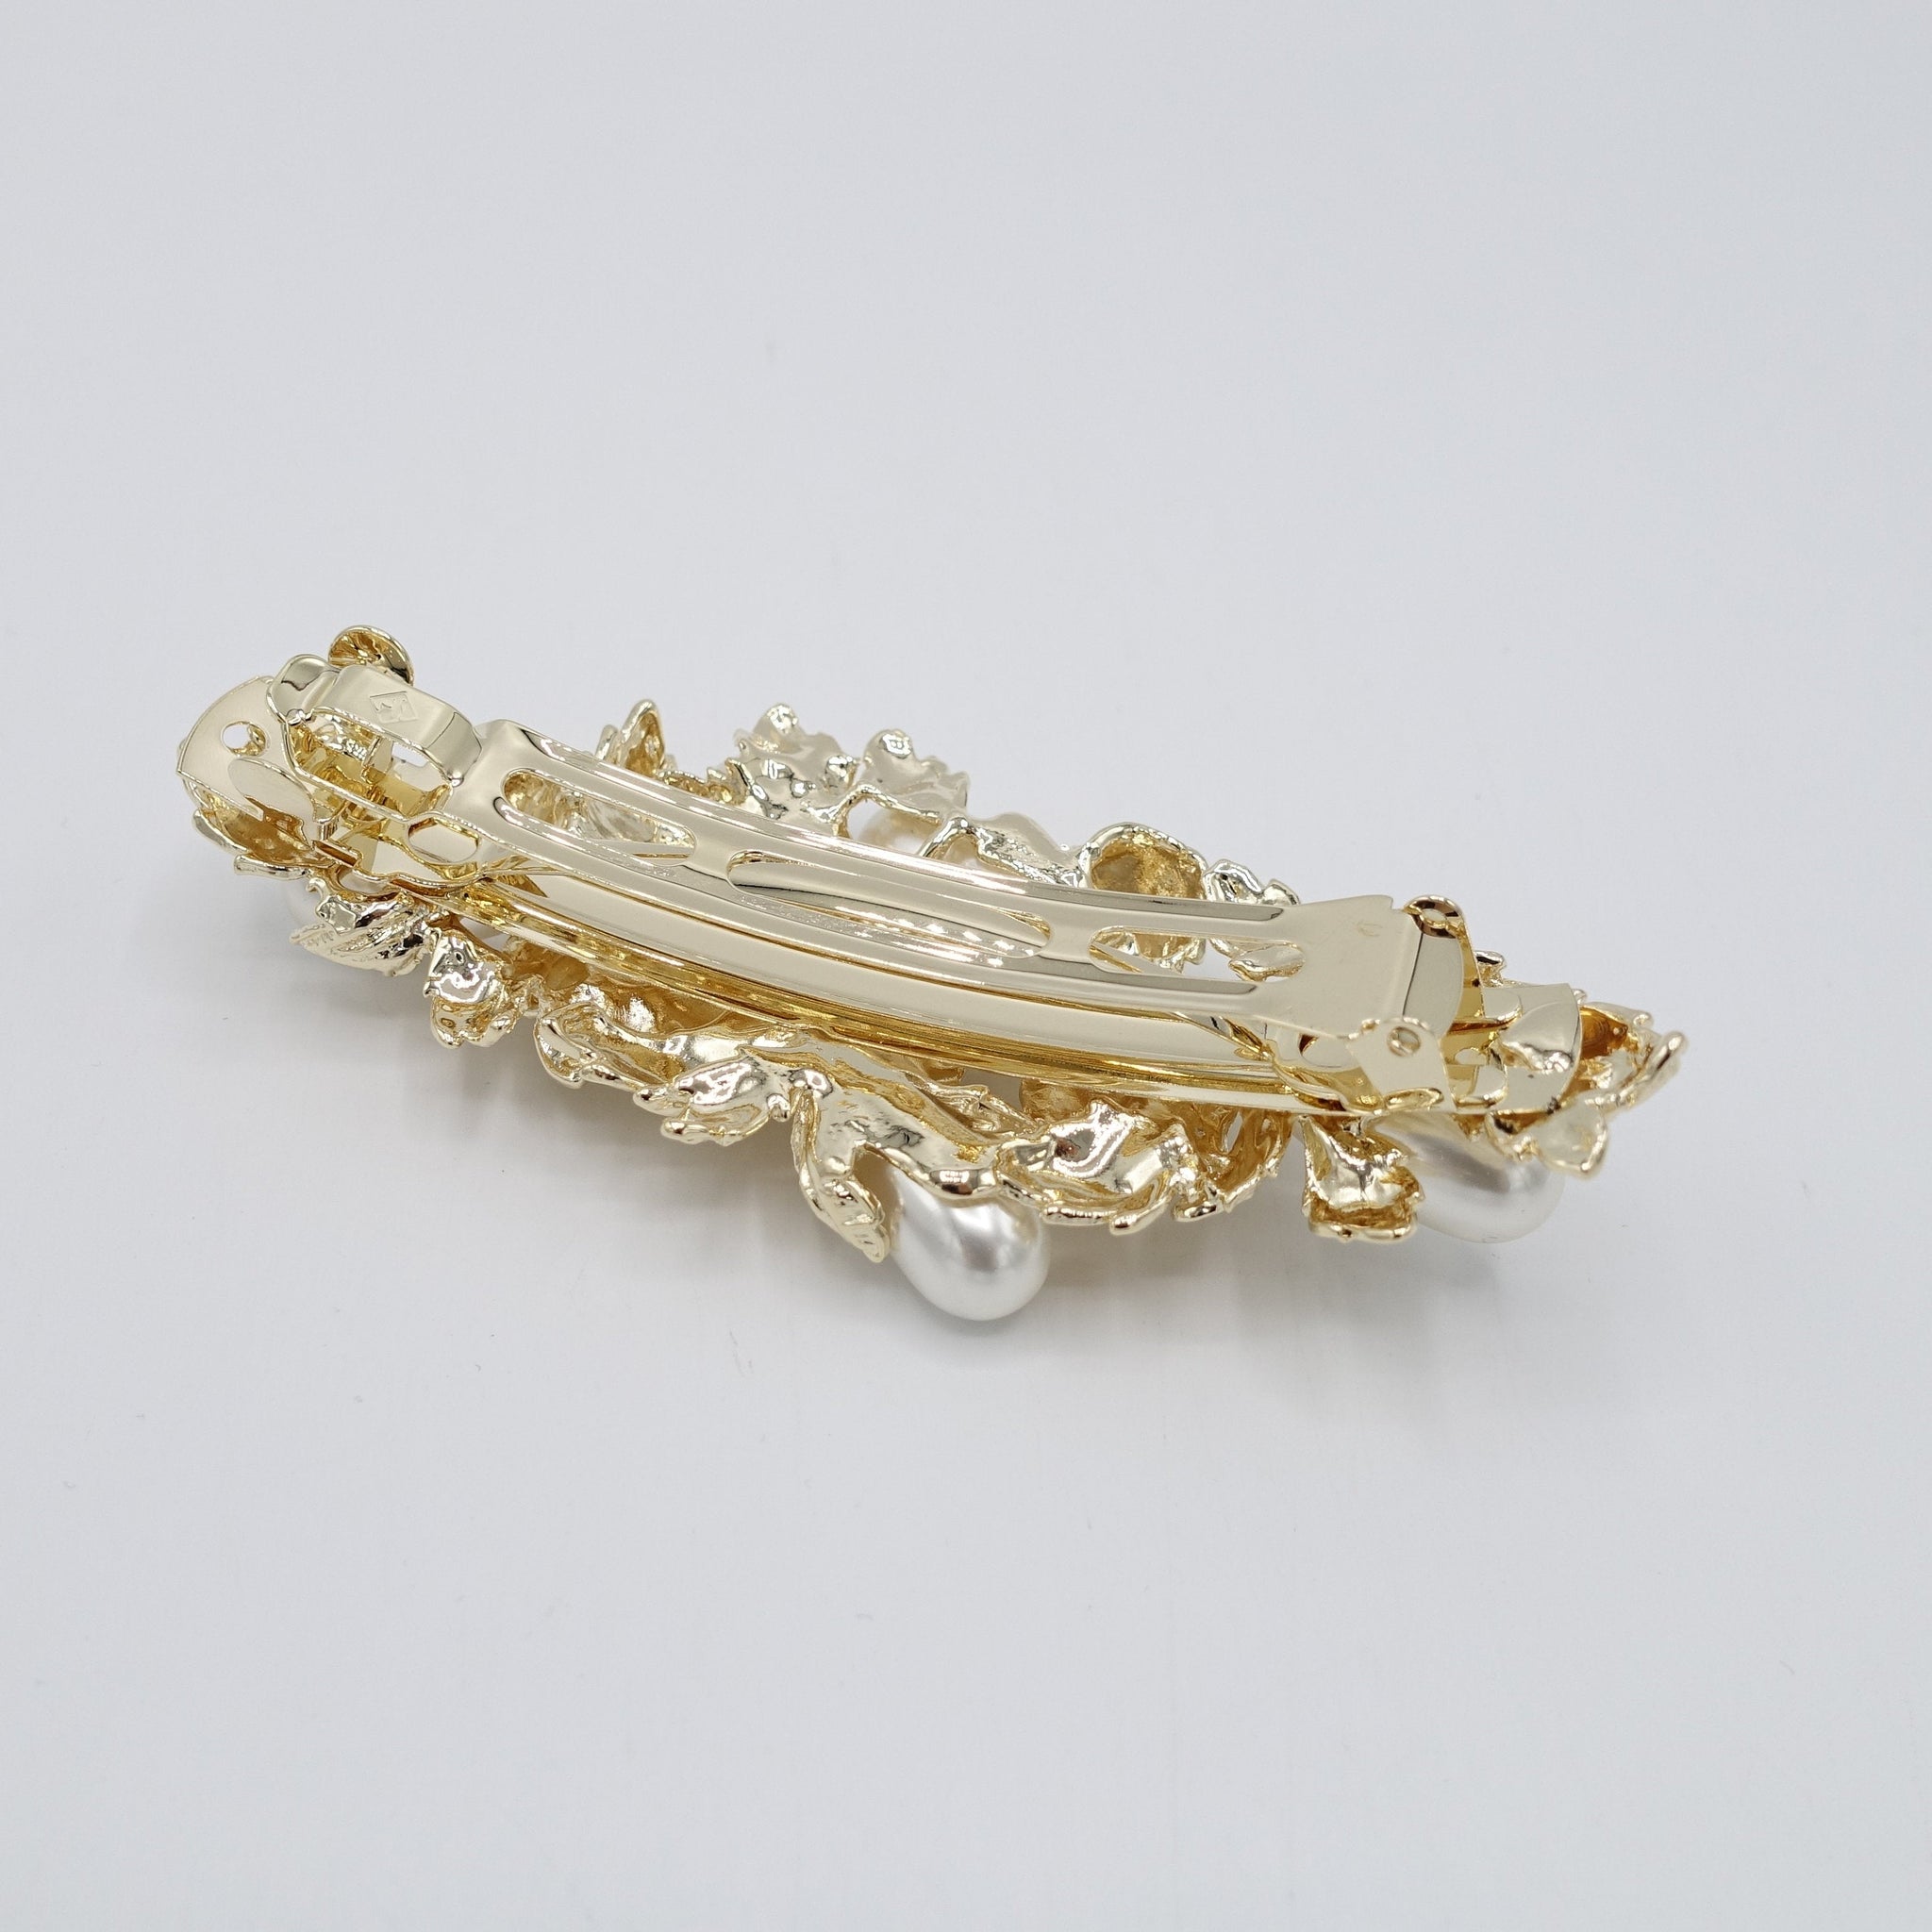 VeryShine metal flower hair barrette bridal pearl hair accessory